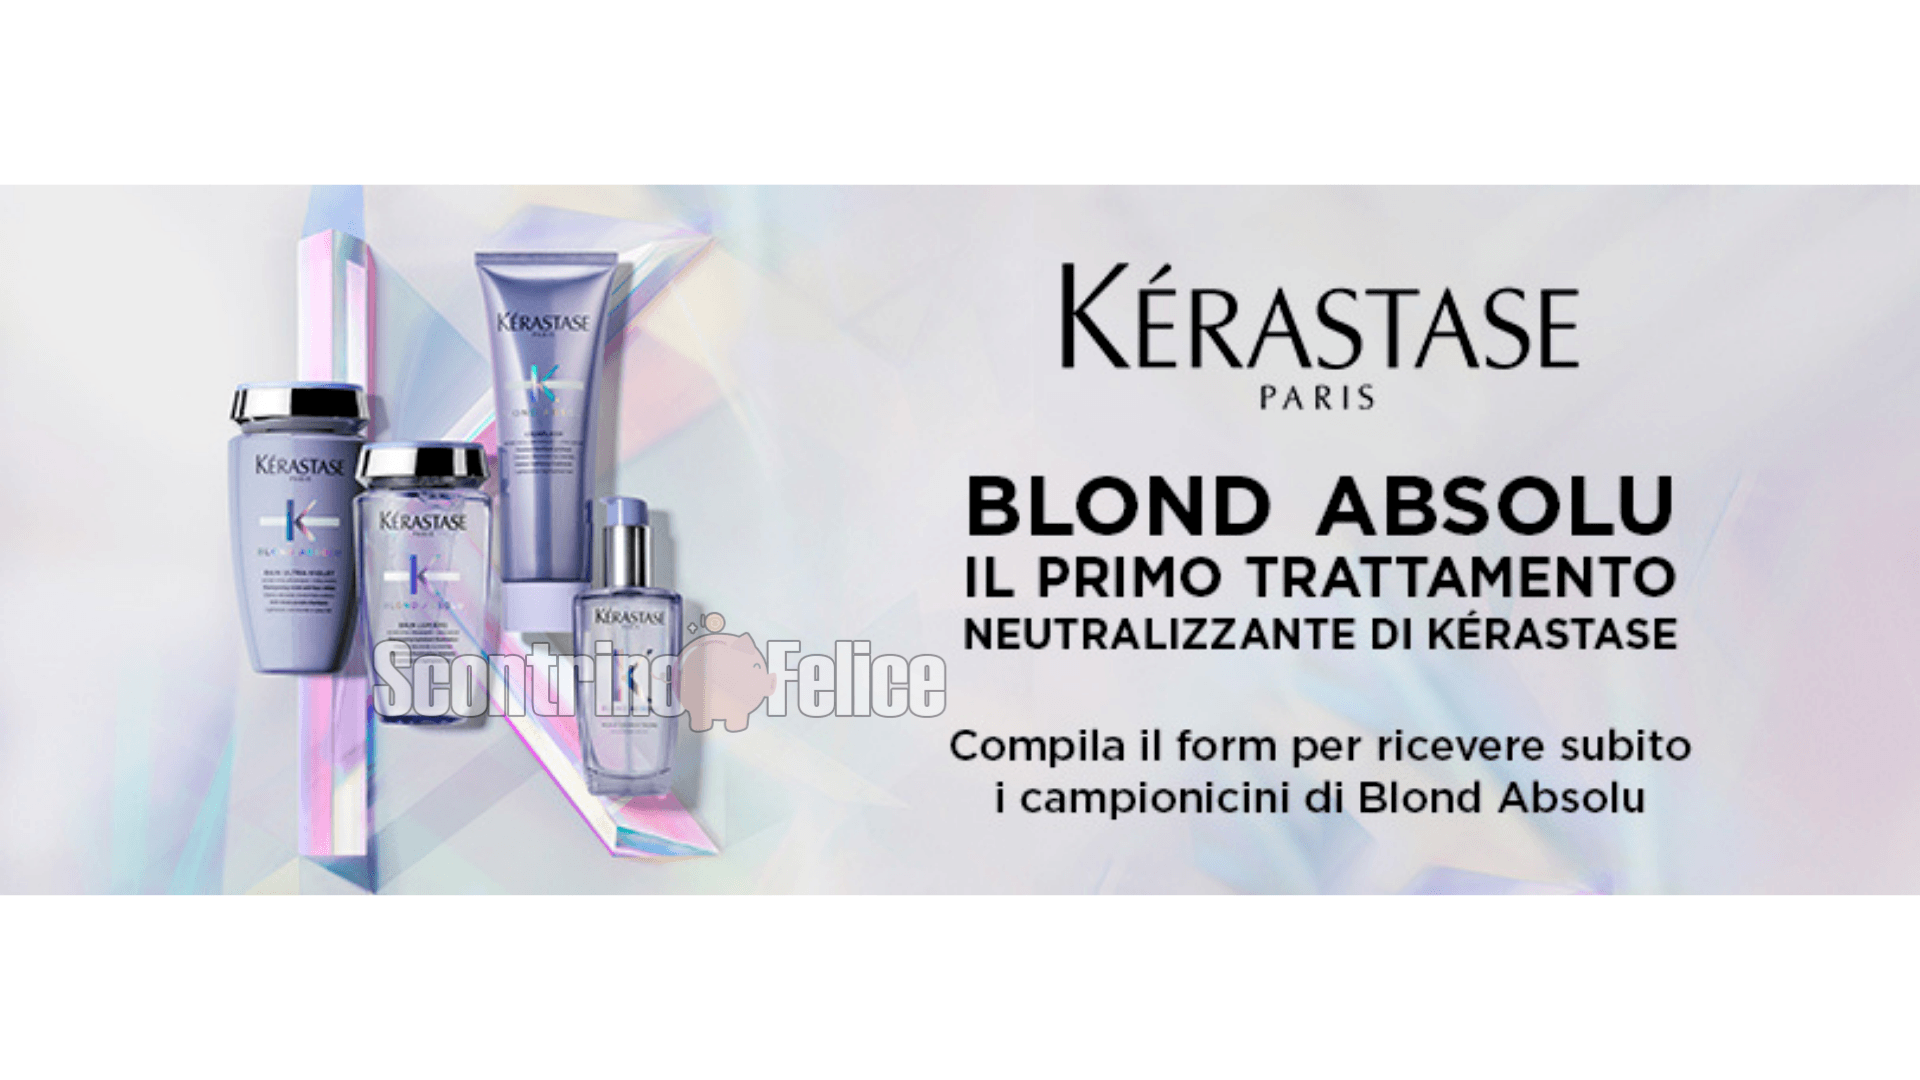 Campioni omaggio Kérastase Blond Absolu da richiedere subito! 5